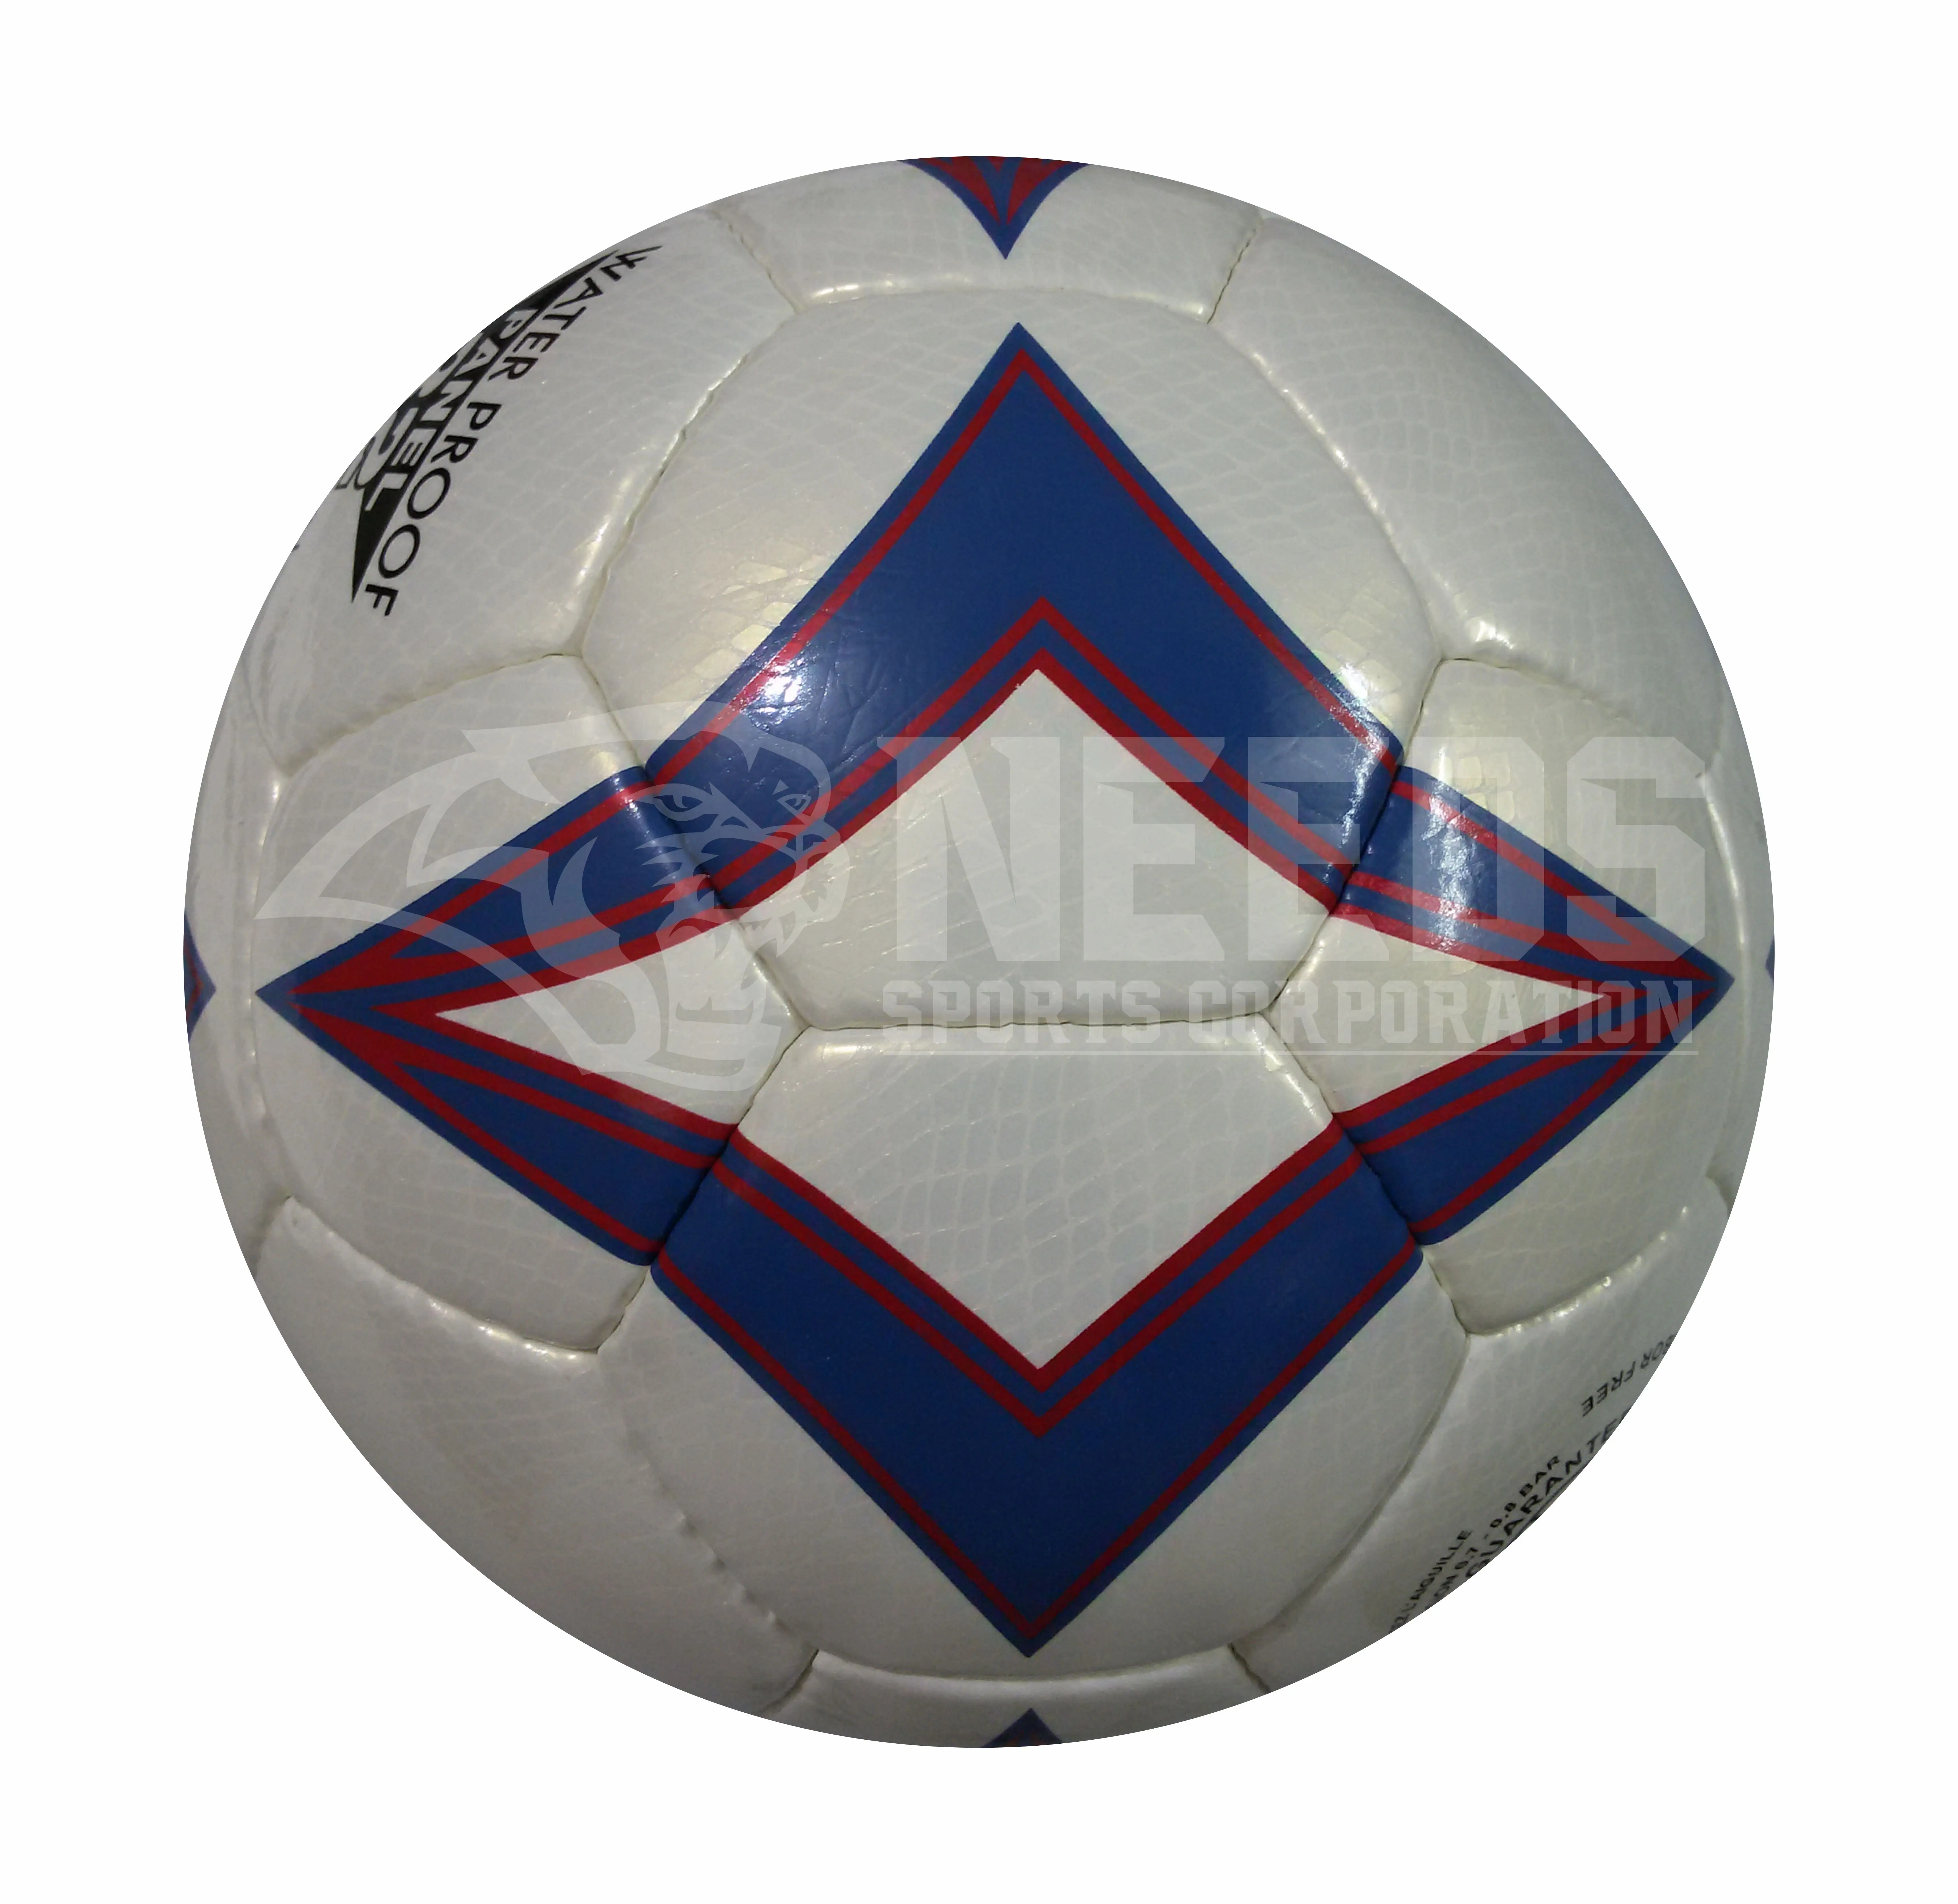 Custom match quality PU football size 5 soccer ball made in Pakistan